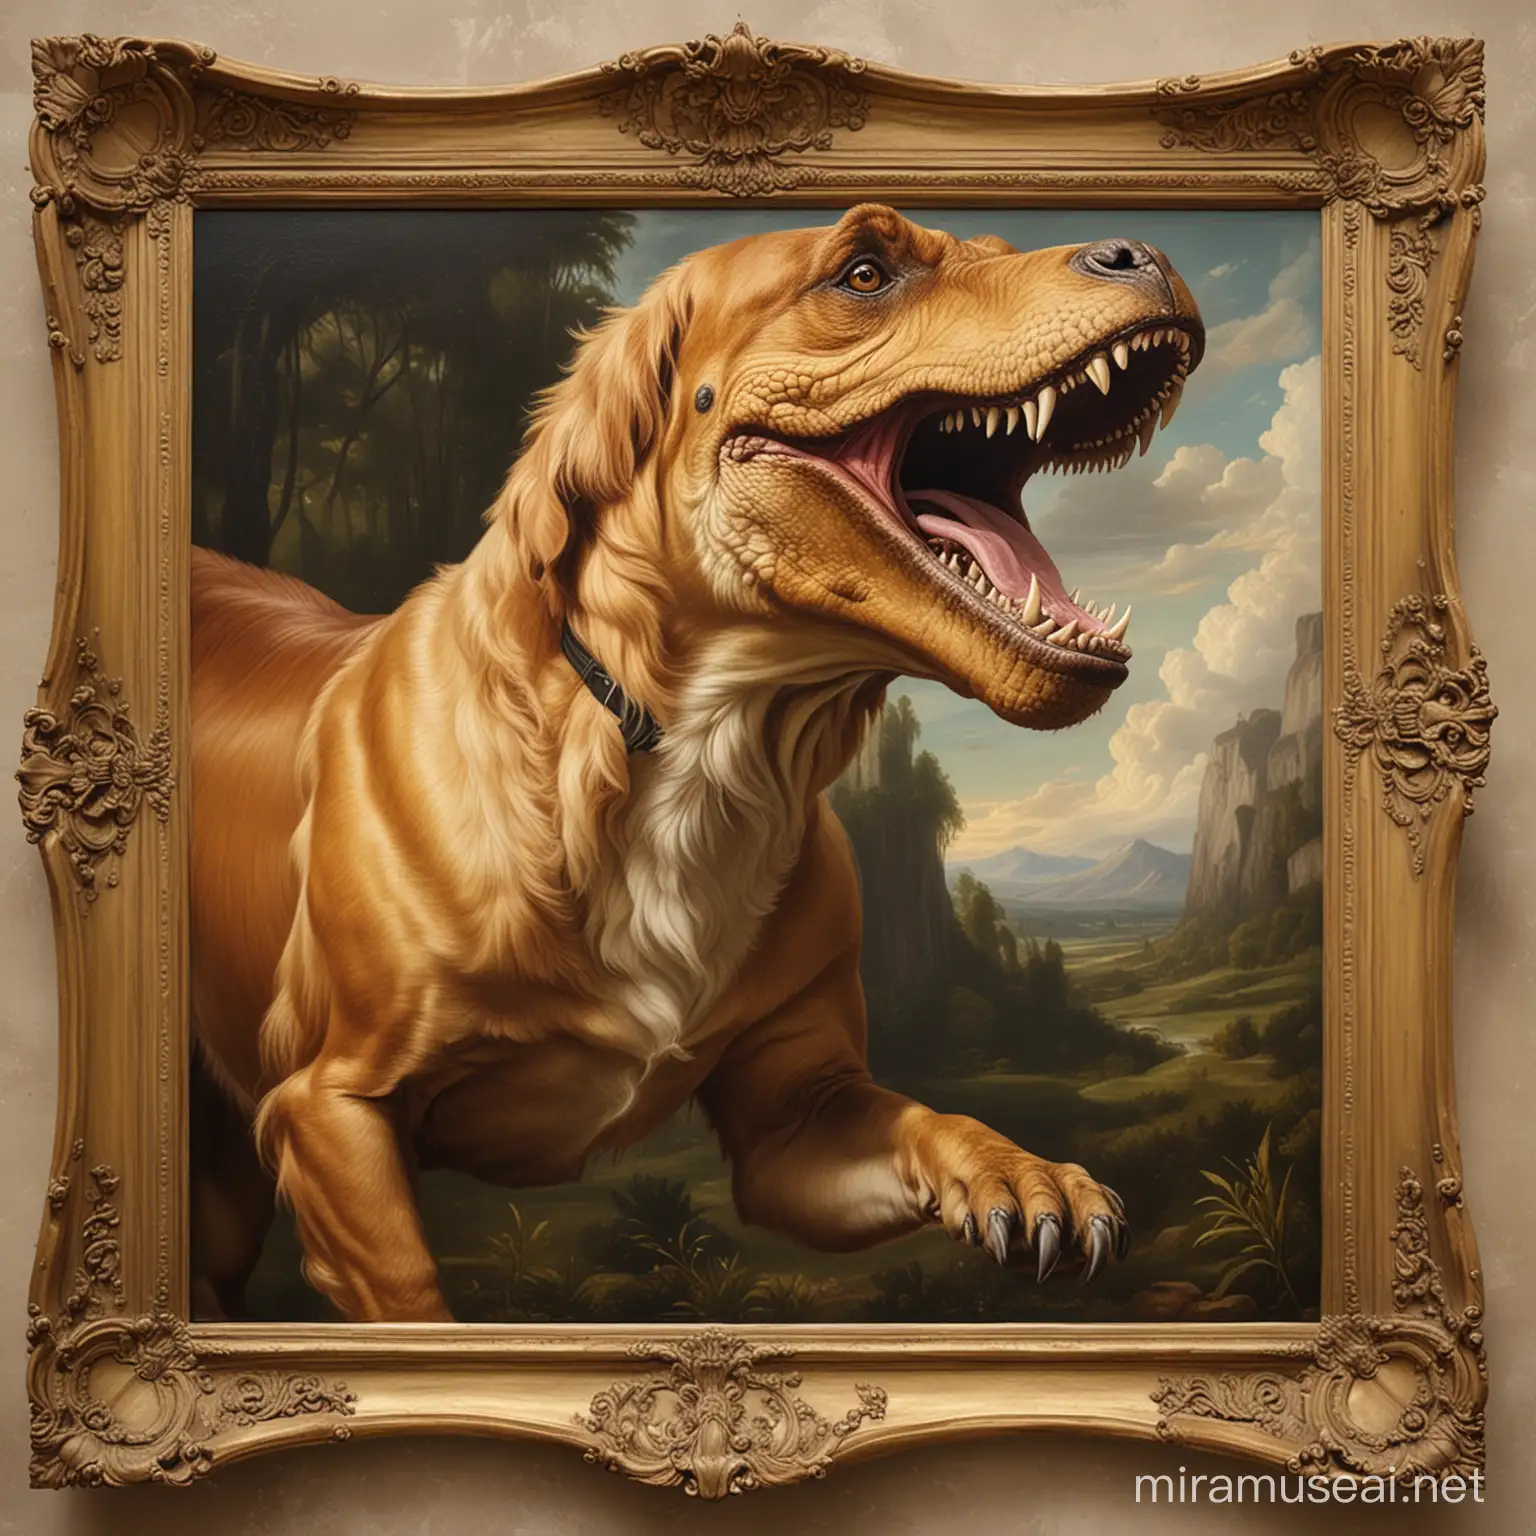 Renaissance Style Painting of a Tyrannosaurus Rex Golden Retriever Hybrid